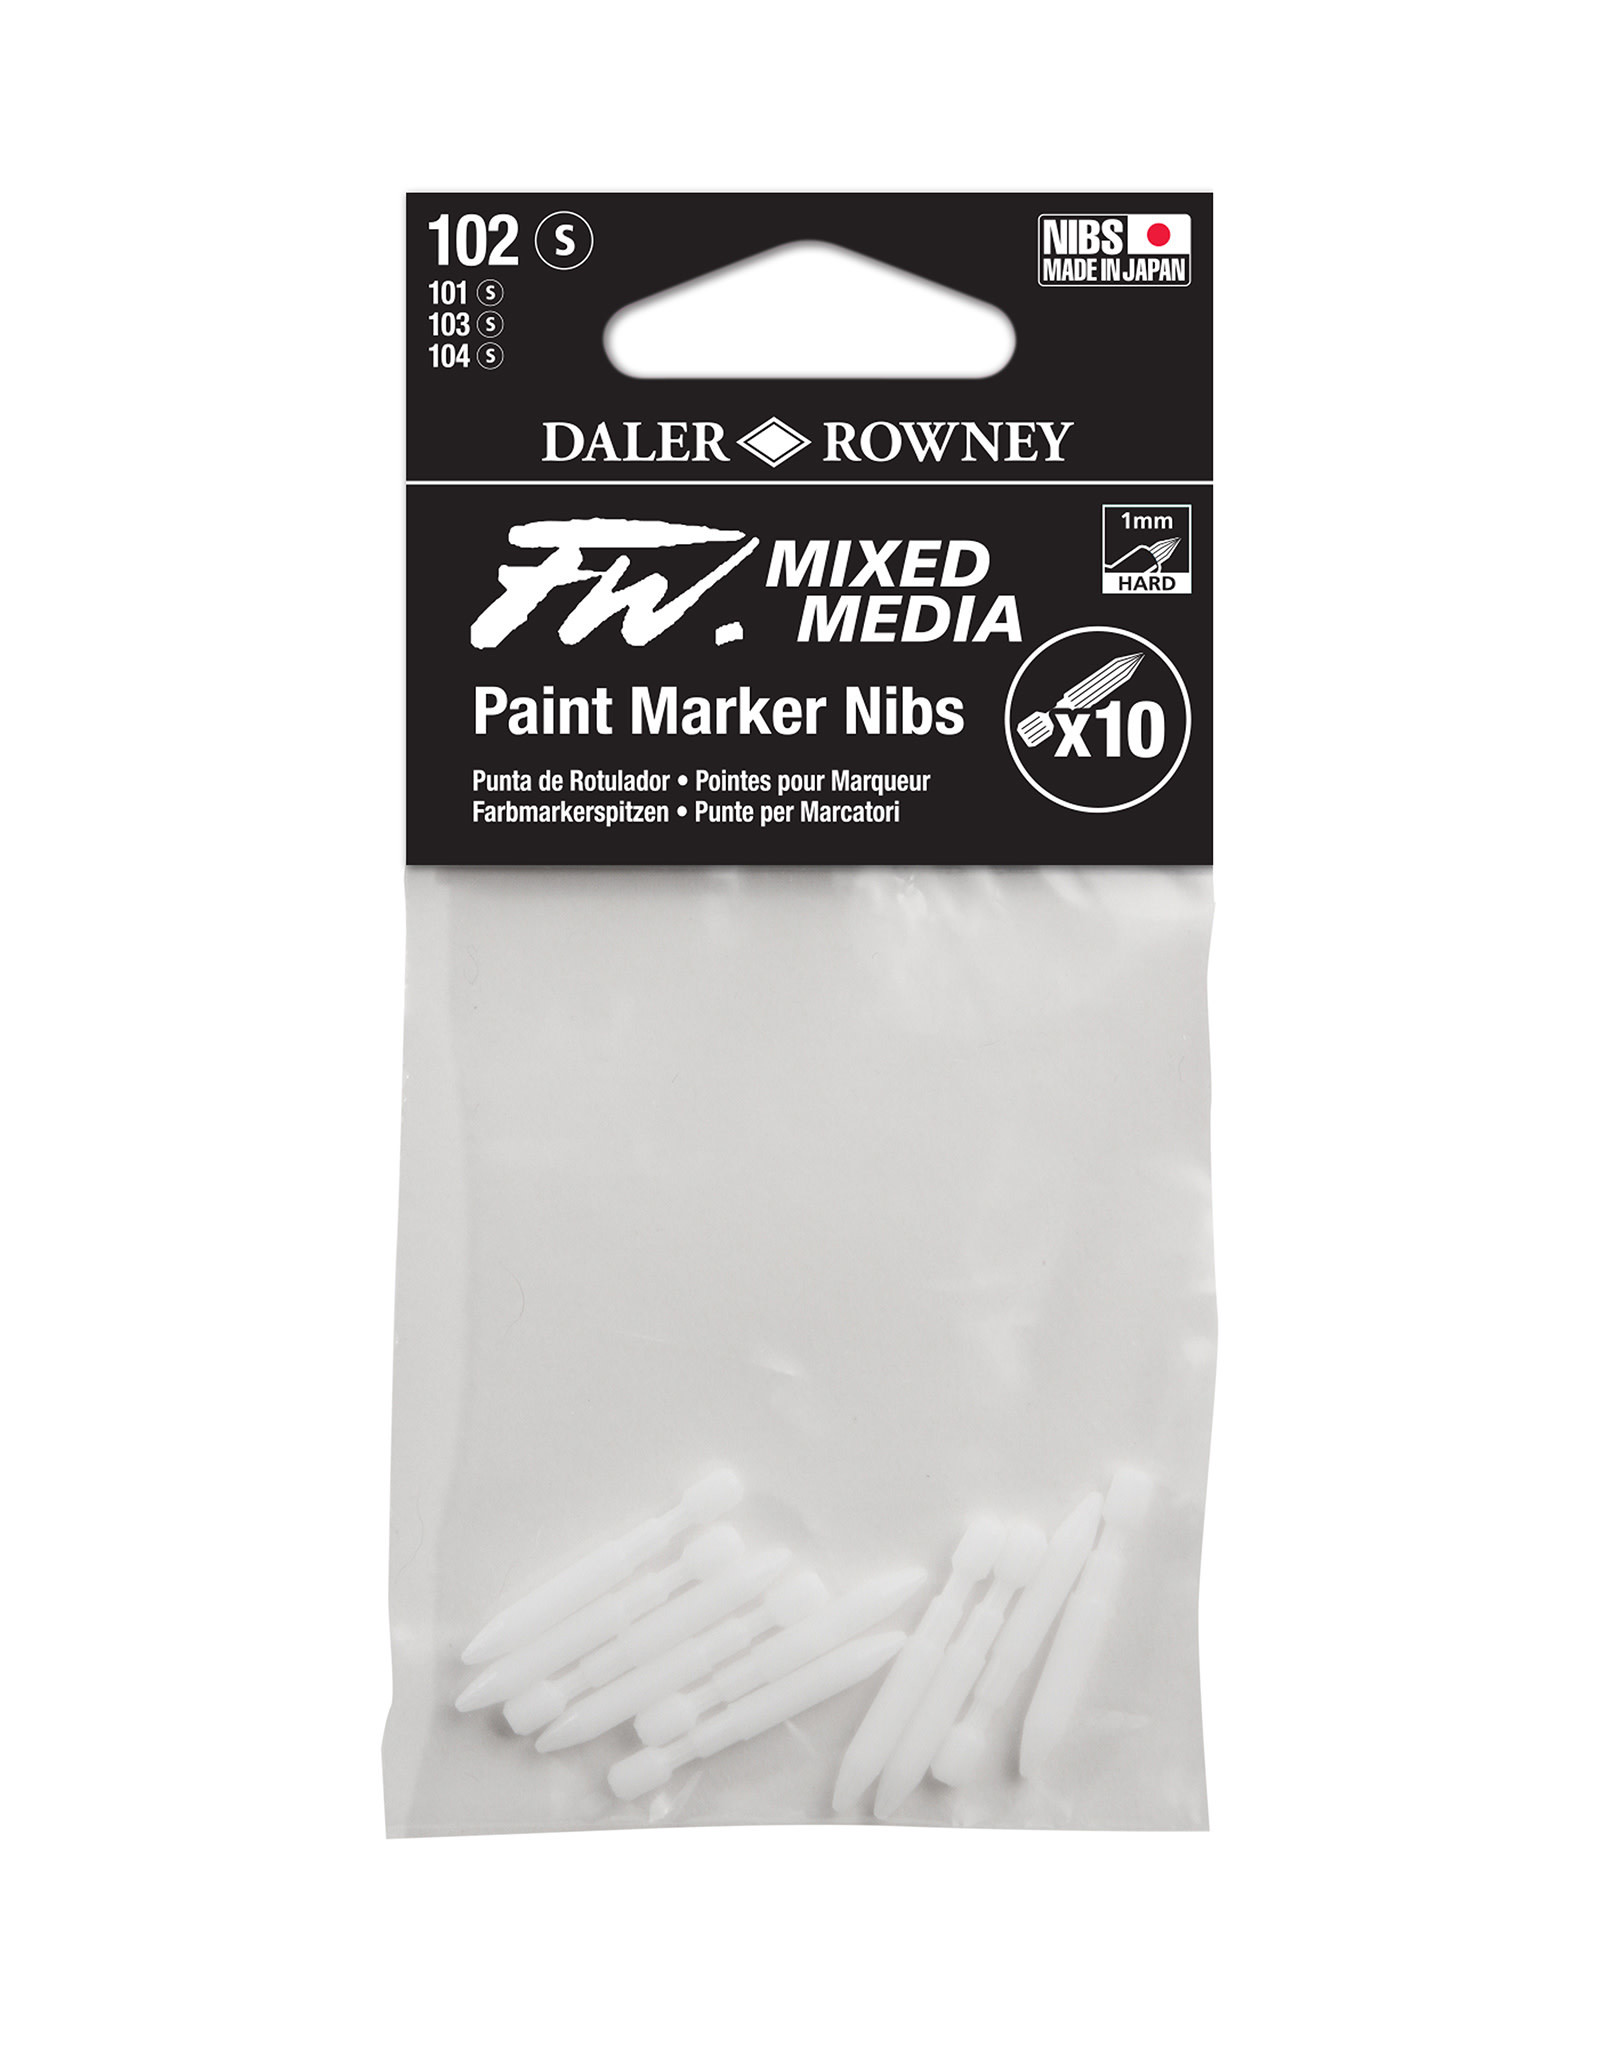 Daler-Rowney Daler-Rowney FW Paint Marker Nib Set of 10, 1mm, Hard Point